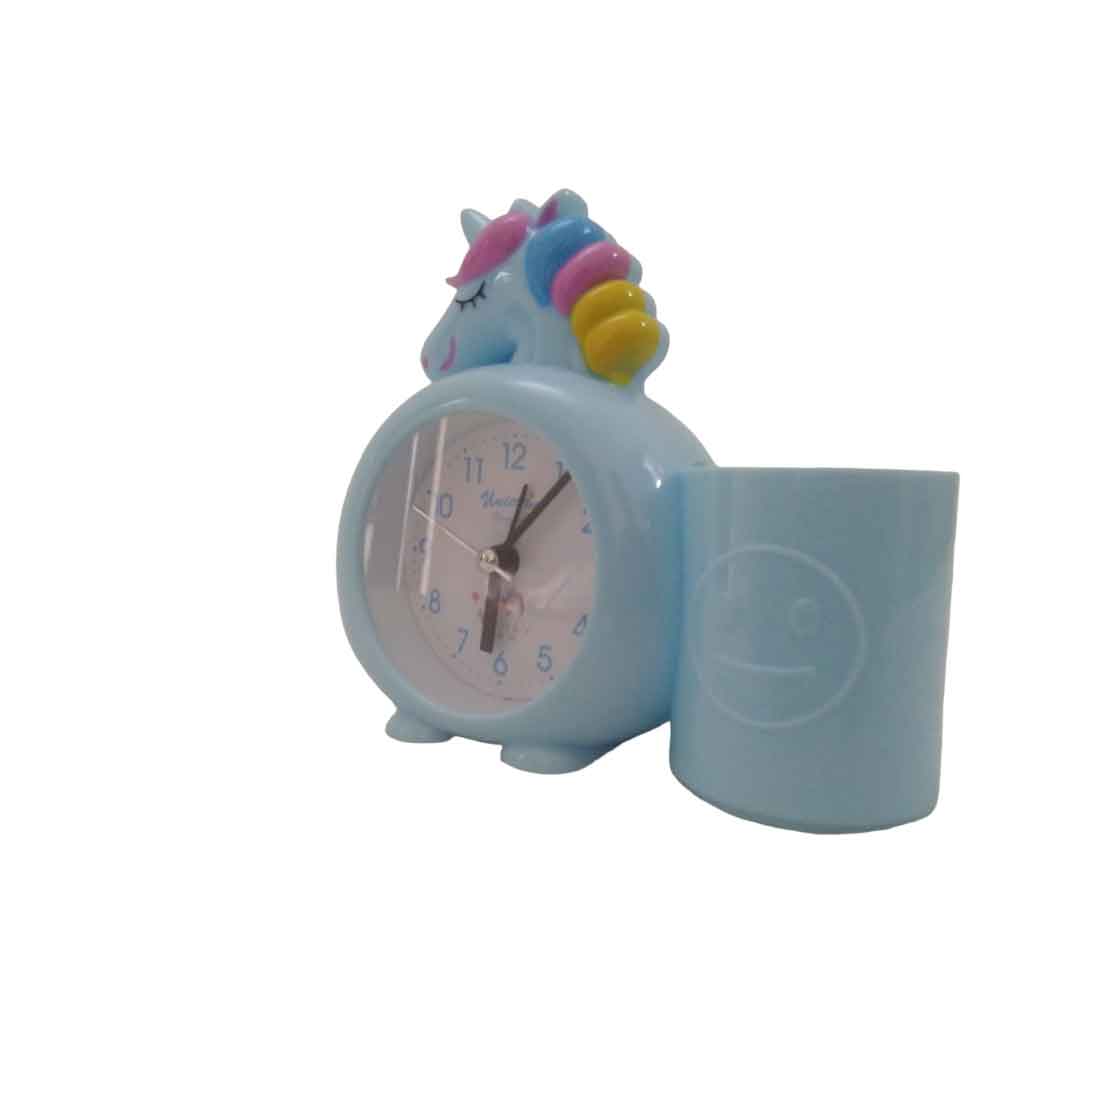 Kids Alarm Clock with Pen Pencil Stand | Unicorn Design Table Alarm Clock - For Kids Room Decor & Birthday Gift - Apkamart